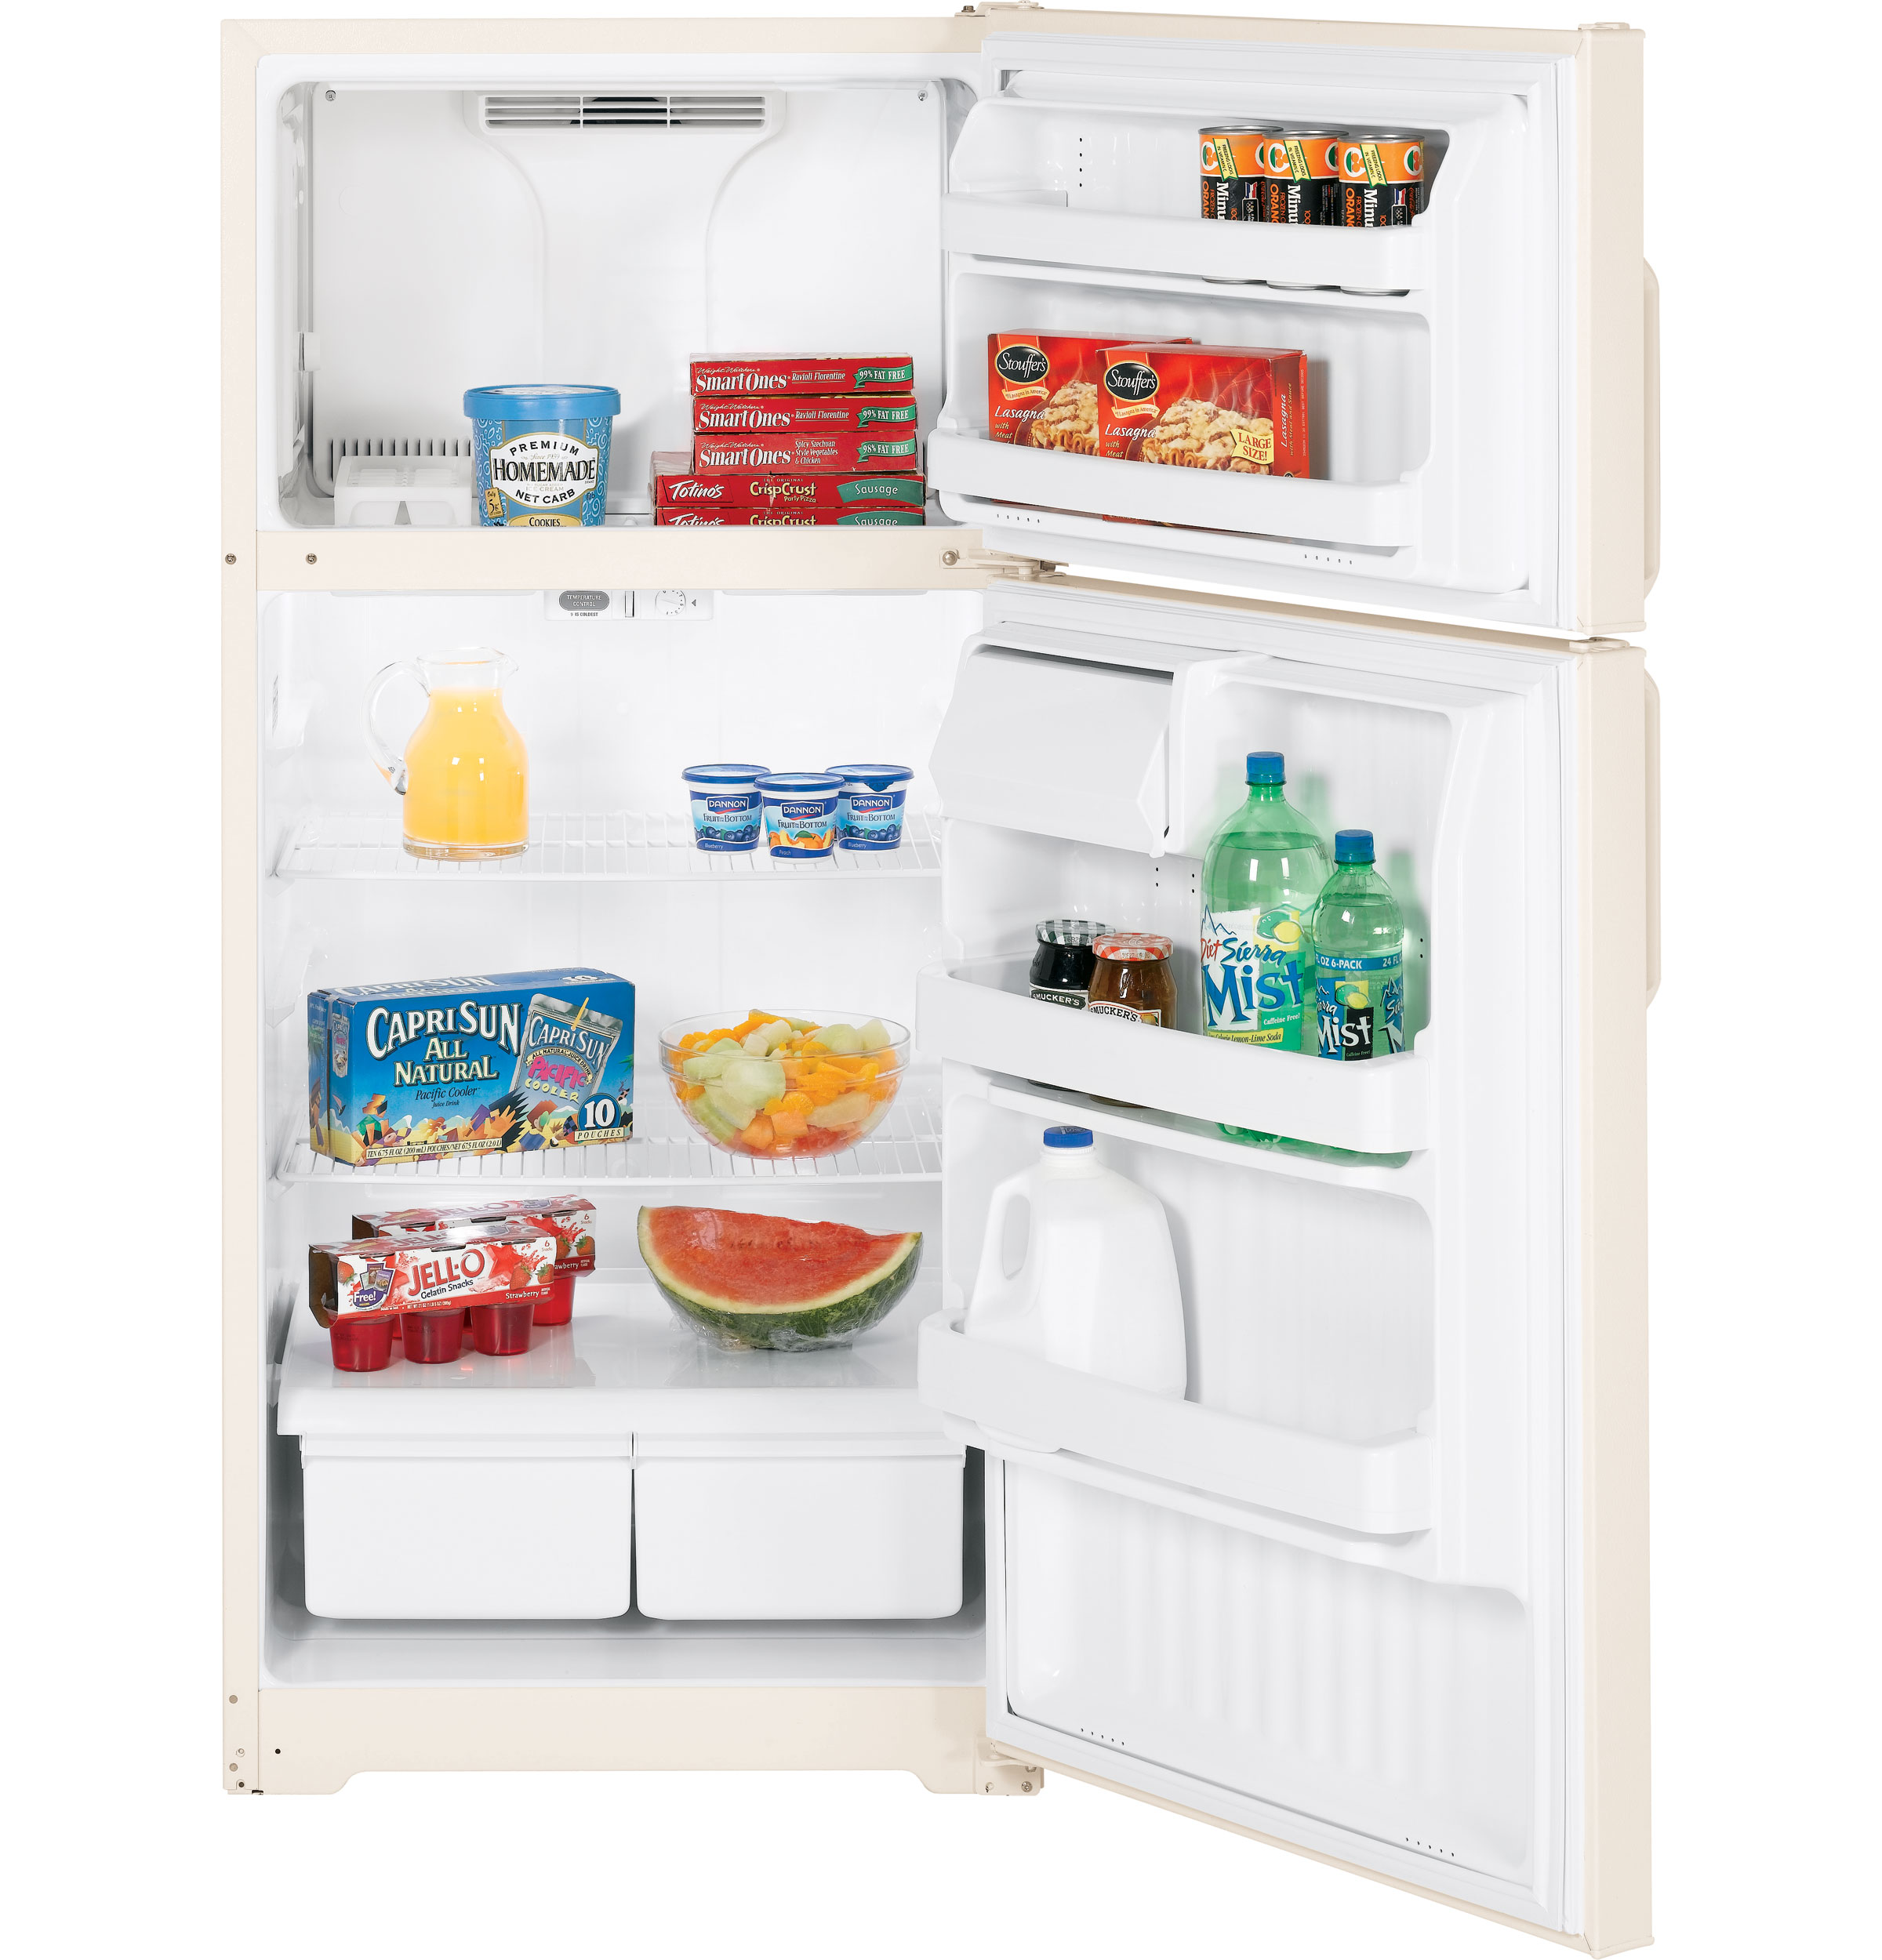 Hotpoint® ENERGY STAR® 15.5 Cu. Ft. Top-Freezer Refrigerator